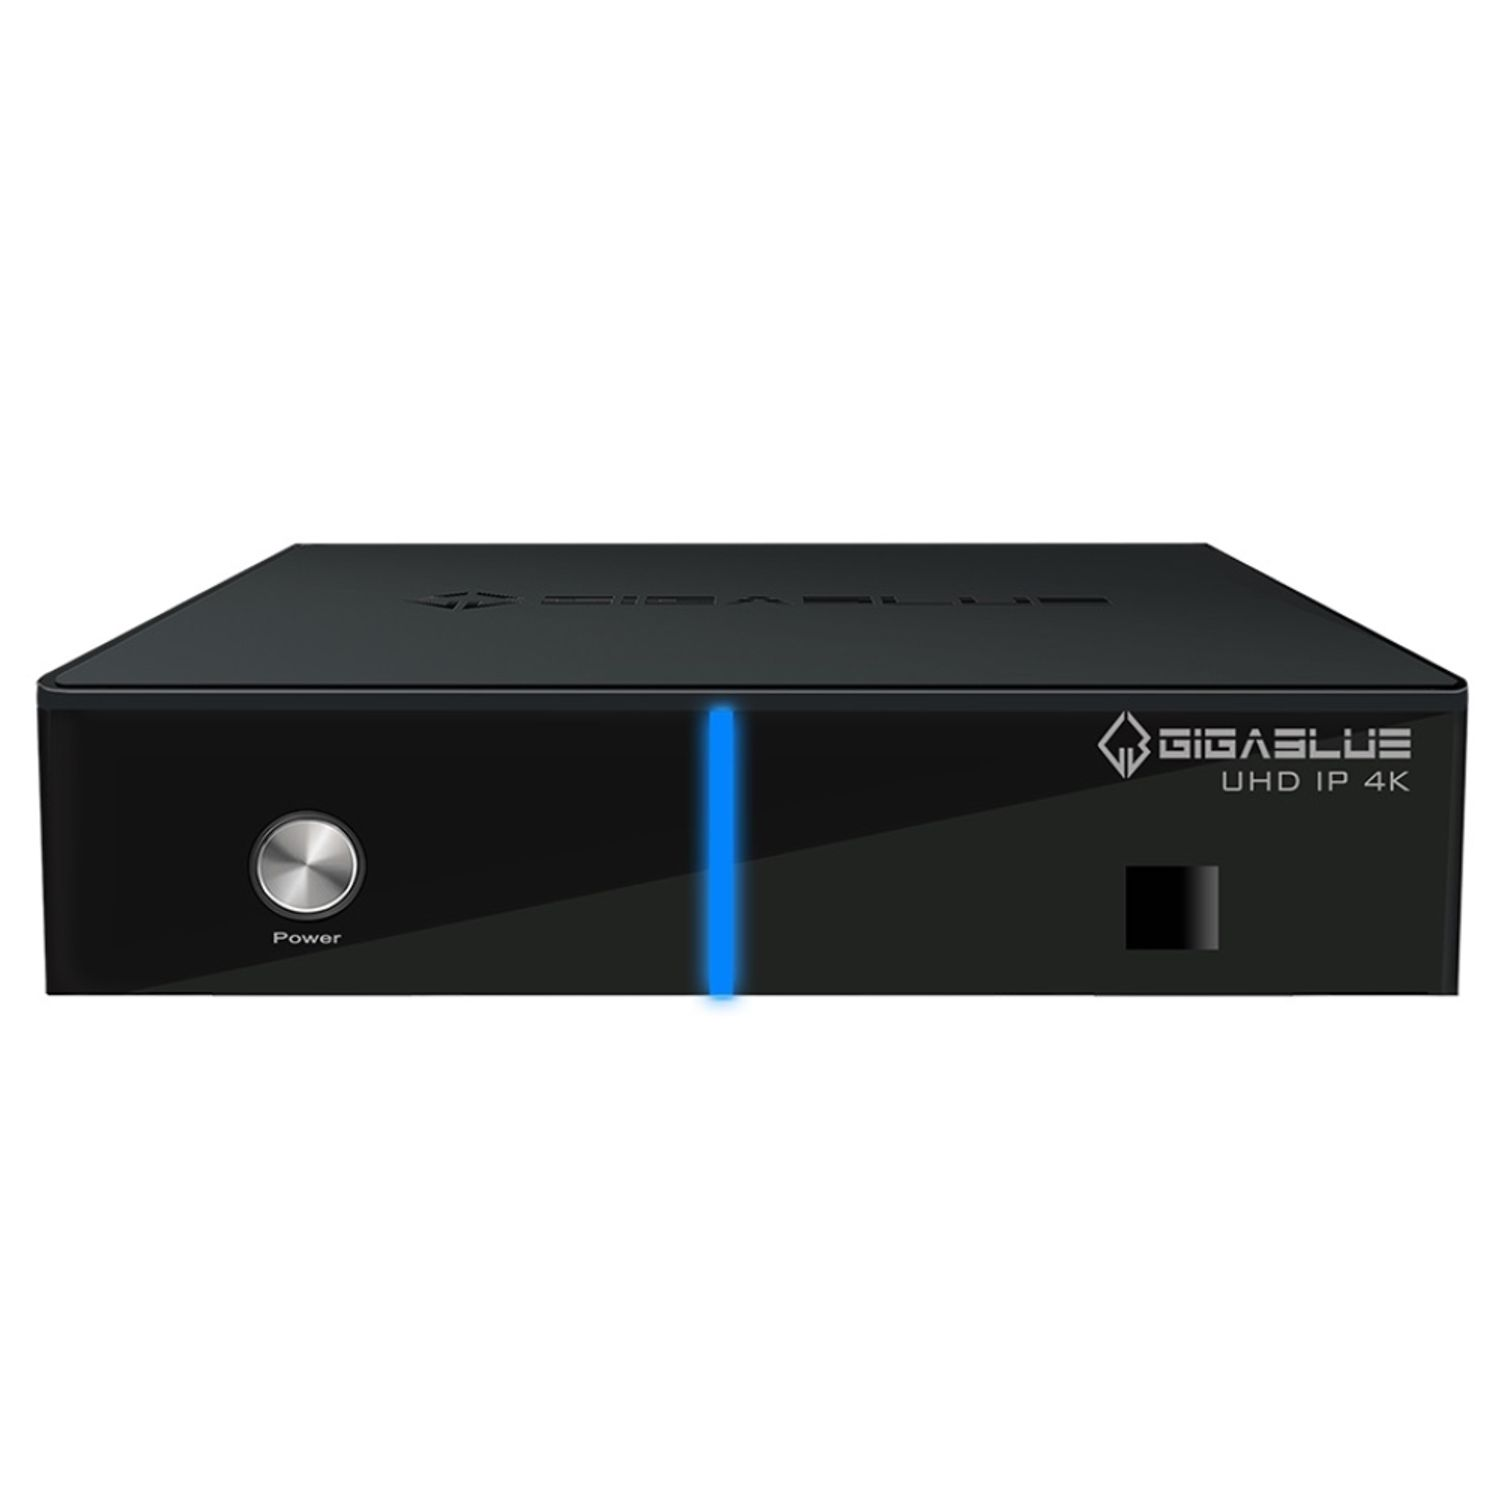 GIGABLUE UHD IP 4K (schwarz) SAT-Receiver